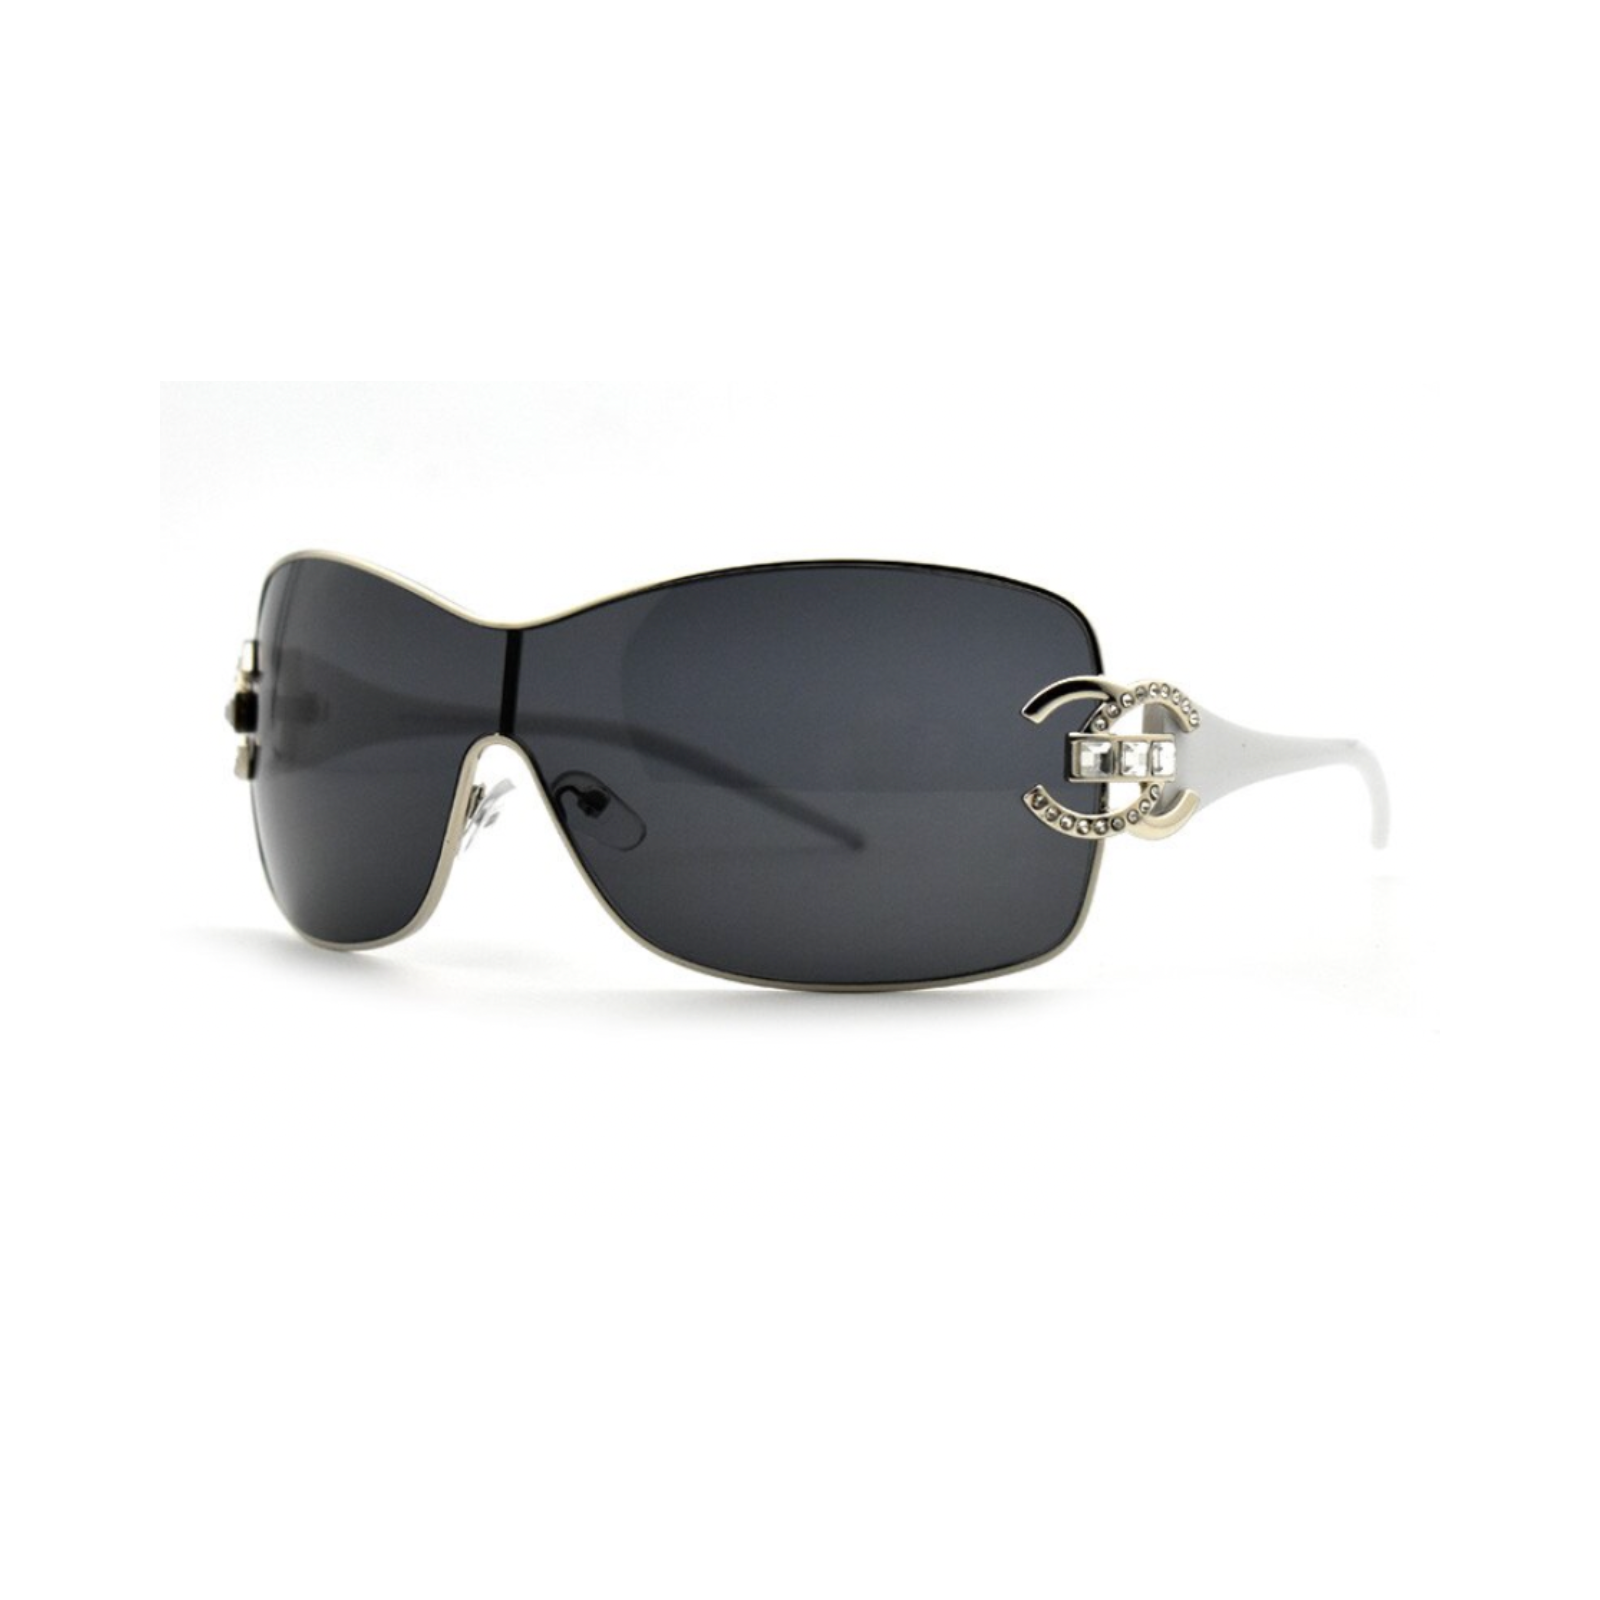 London Sunglasses + Black